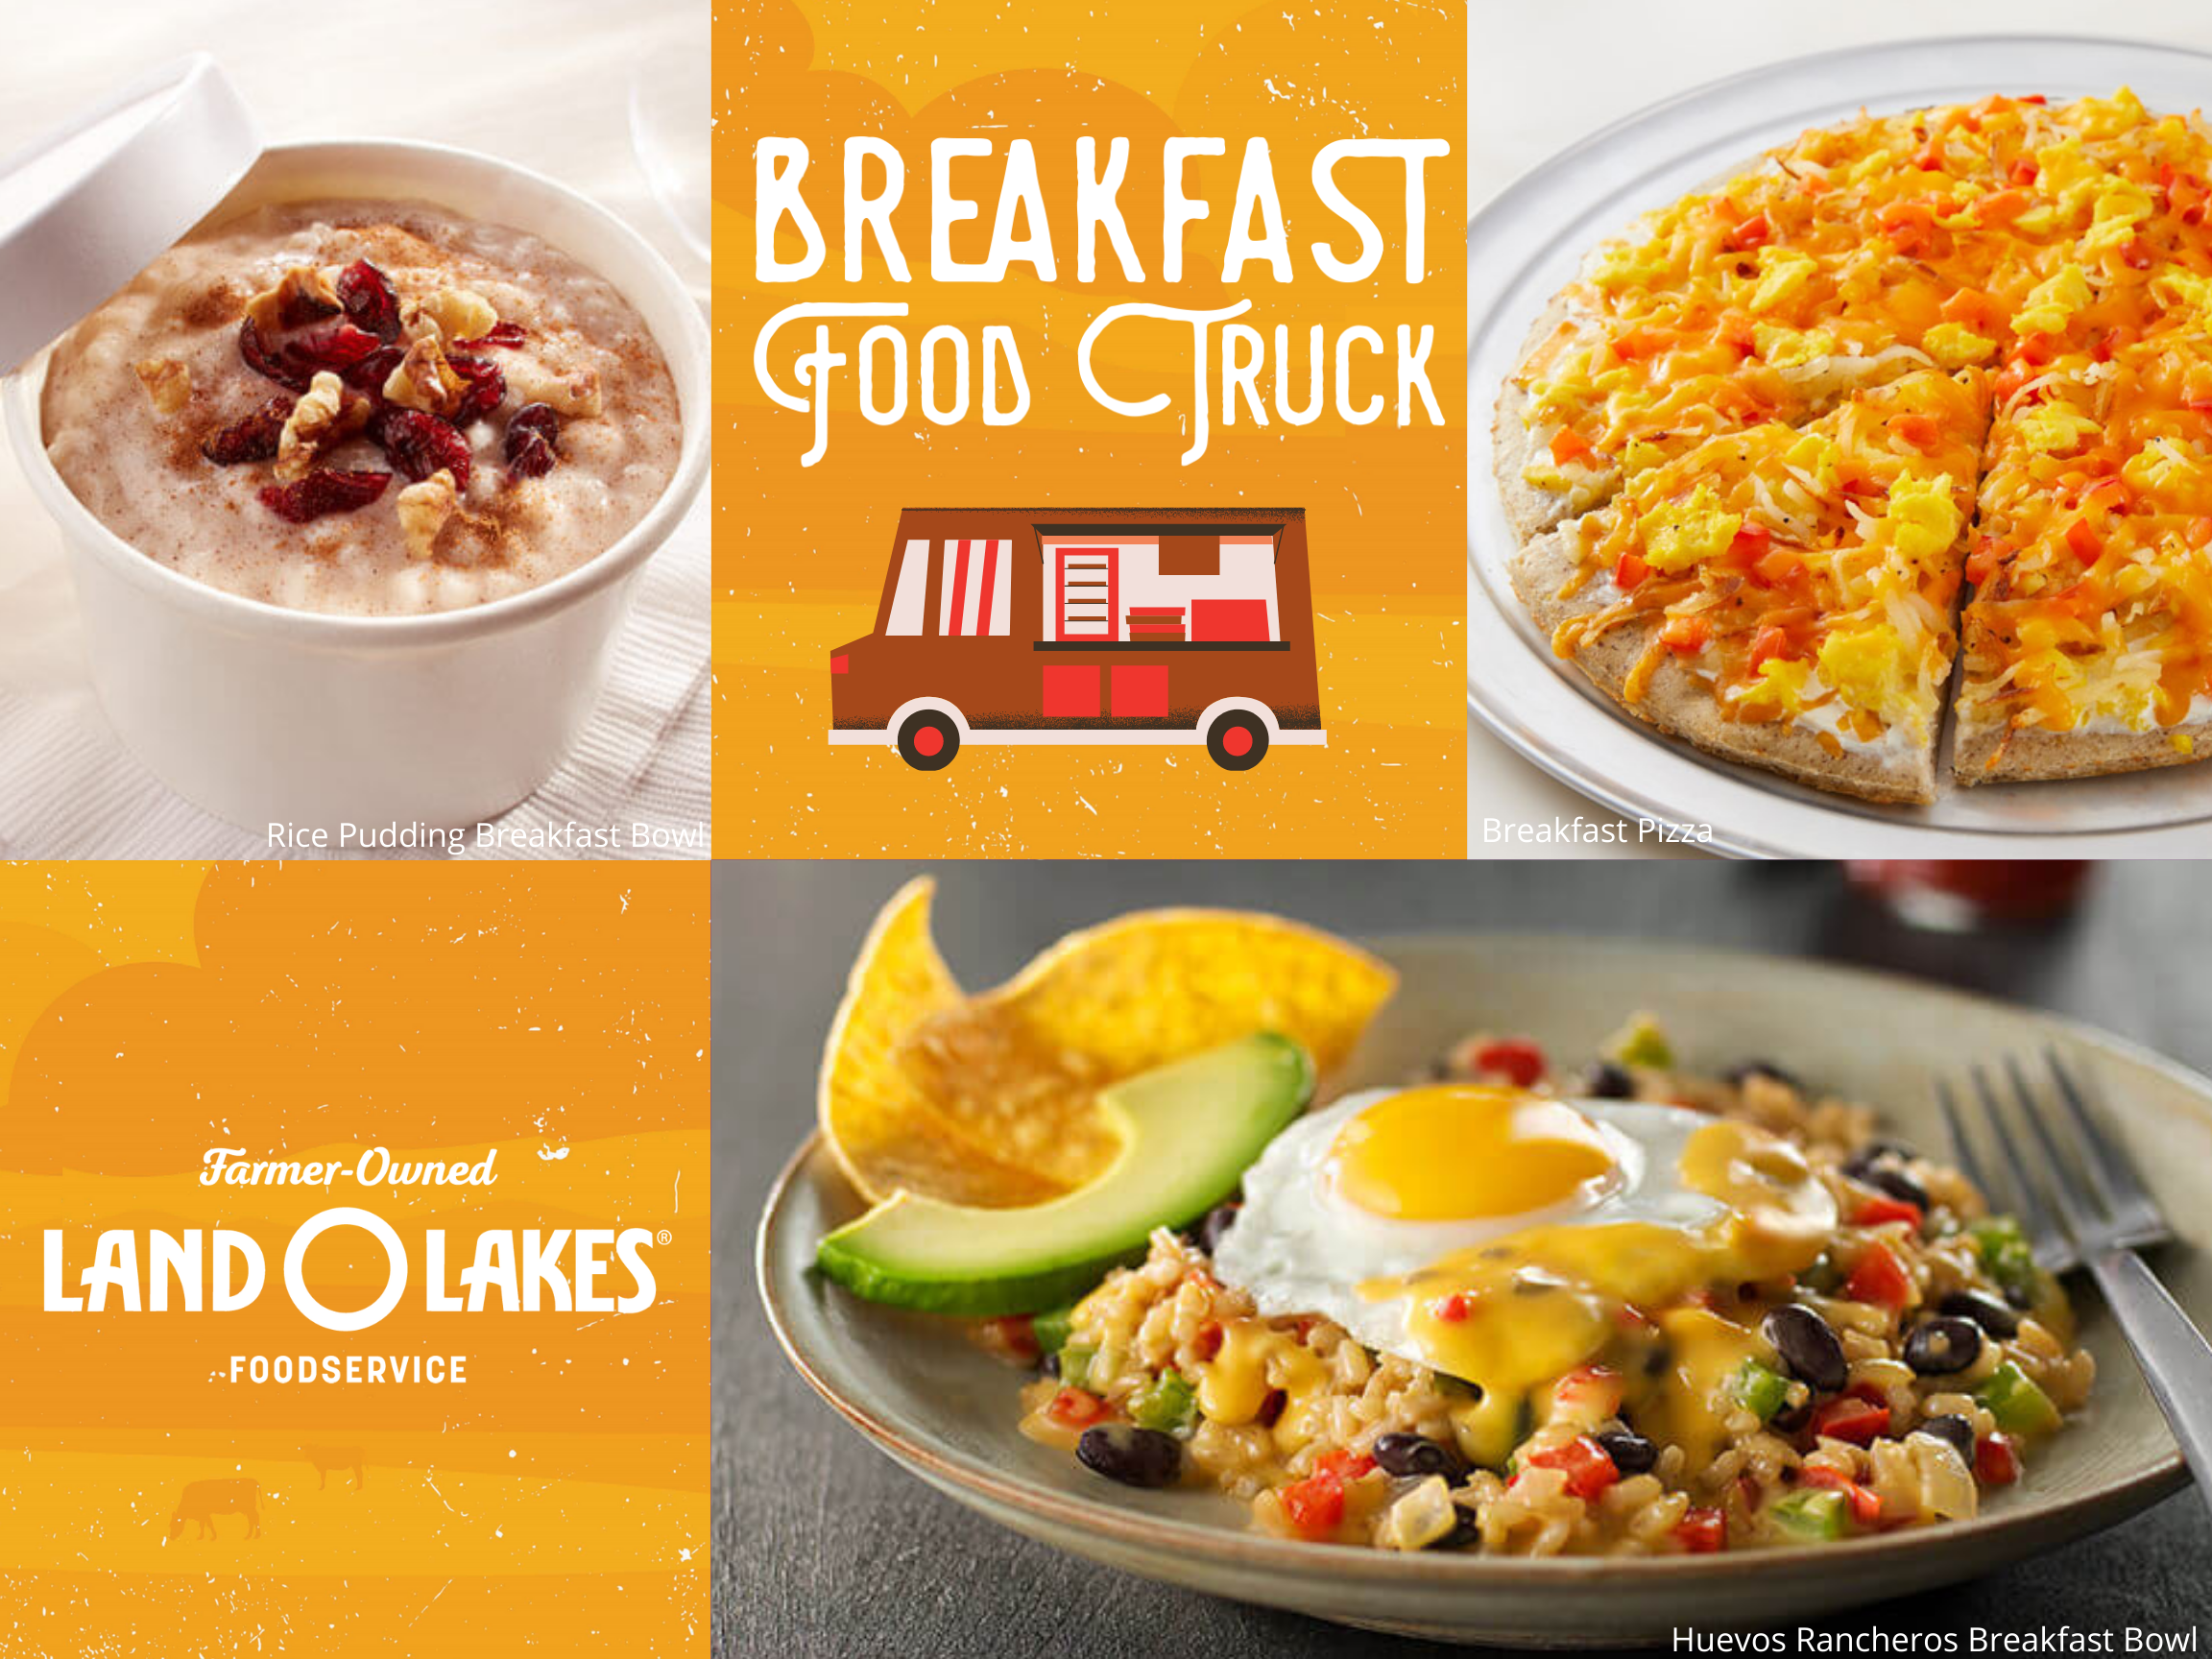 Land O'Lakes Food Truck Menu Inspiration featuring Rice Pudding Breakfast Bowl, Breakfast Pizza and Huevos Rancheros Breakfast Bowl